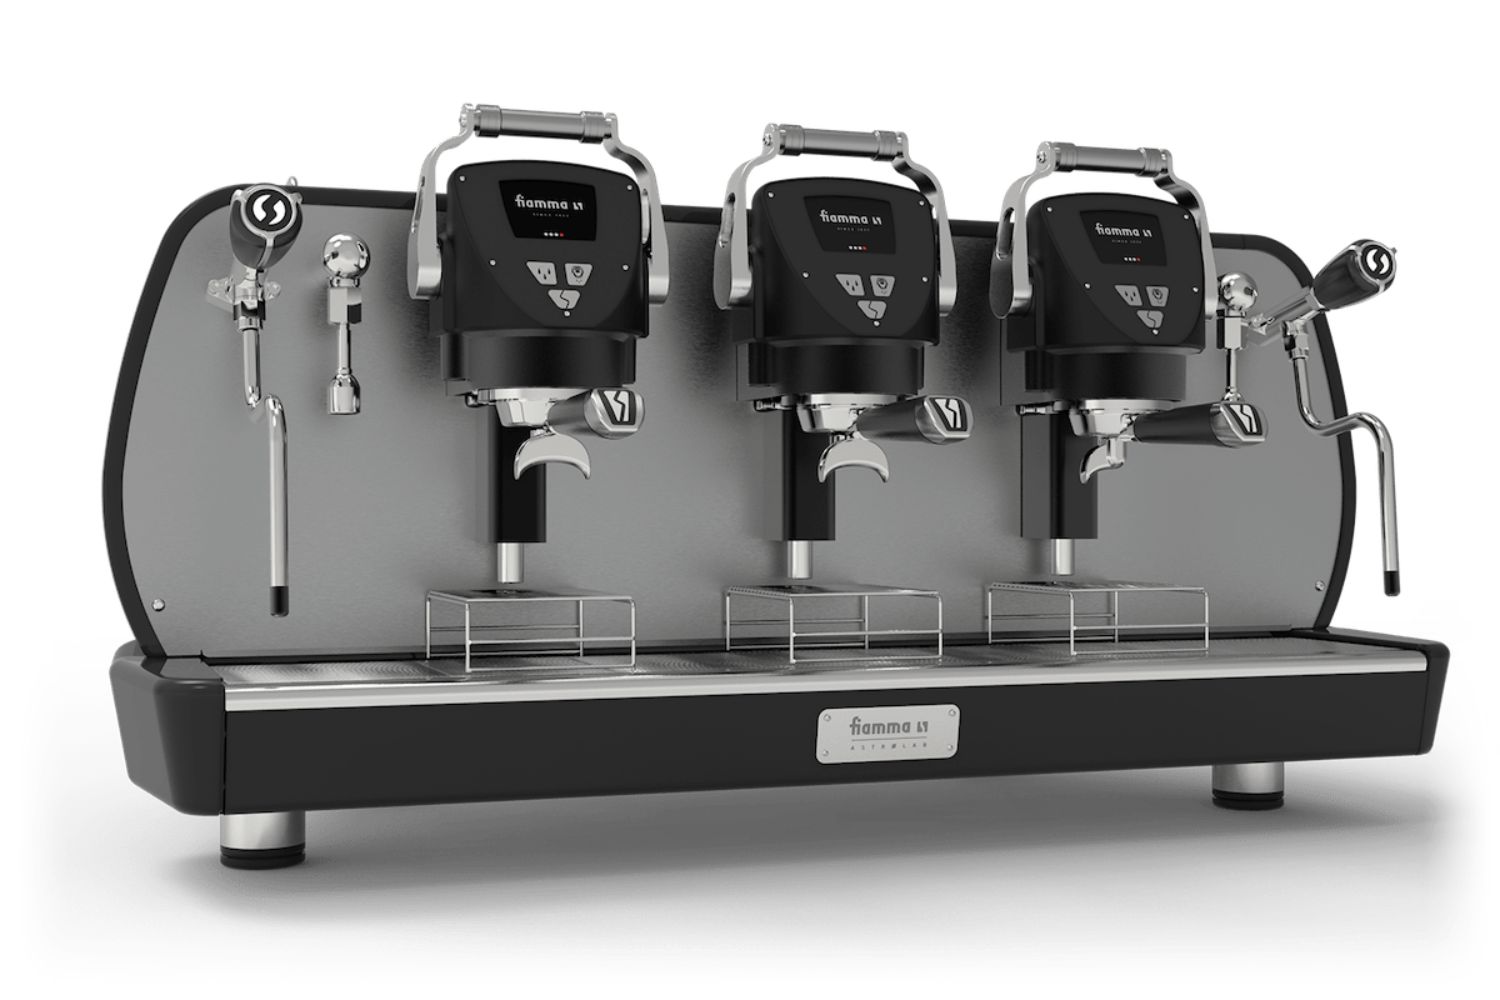 Fiamma astrolab 3 pp - Fiamma espresso coffee machines